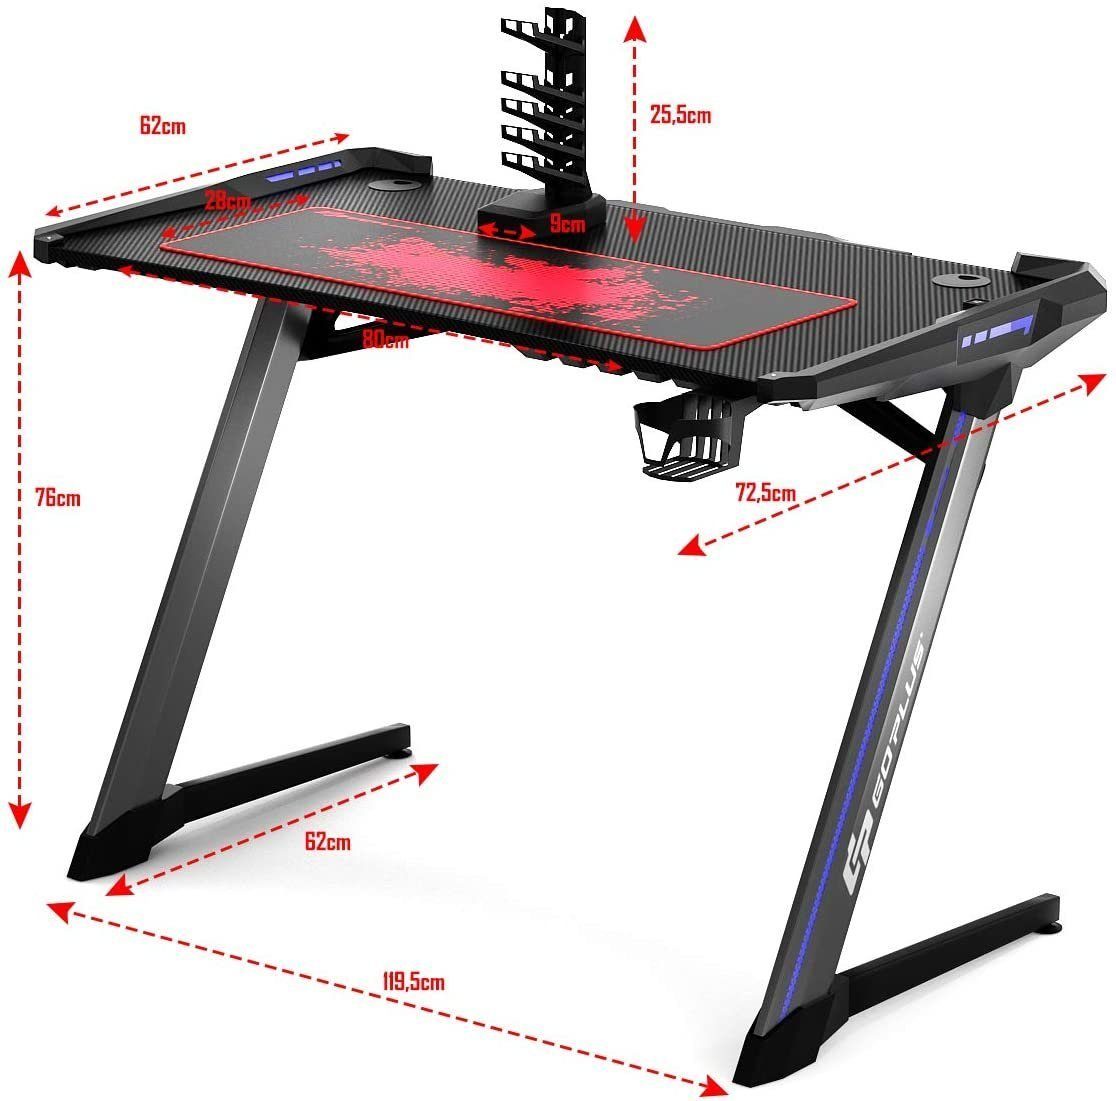 Gamingtisch, 4 mit RGB-Led, Z-förmig Controller-Halterung 120cm USB, COSTWAY